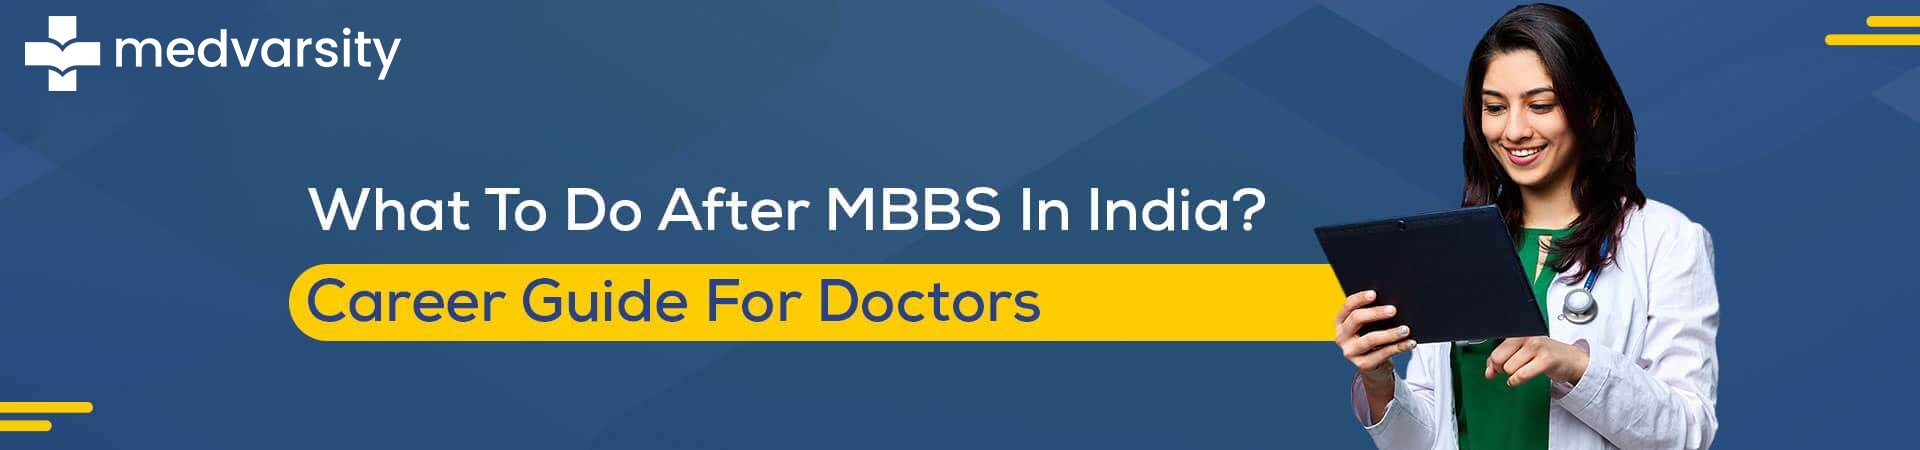 MBBS Career Guide